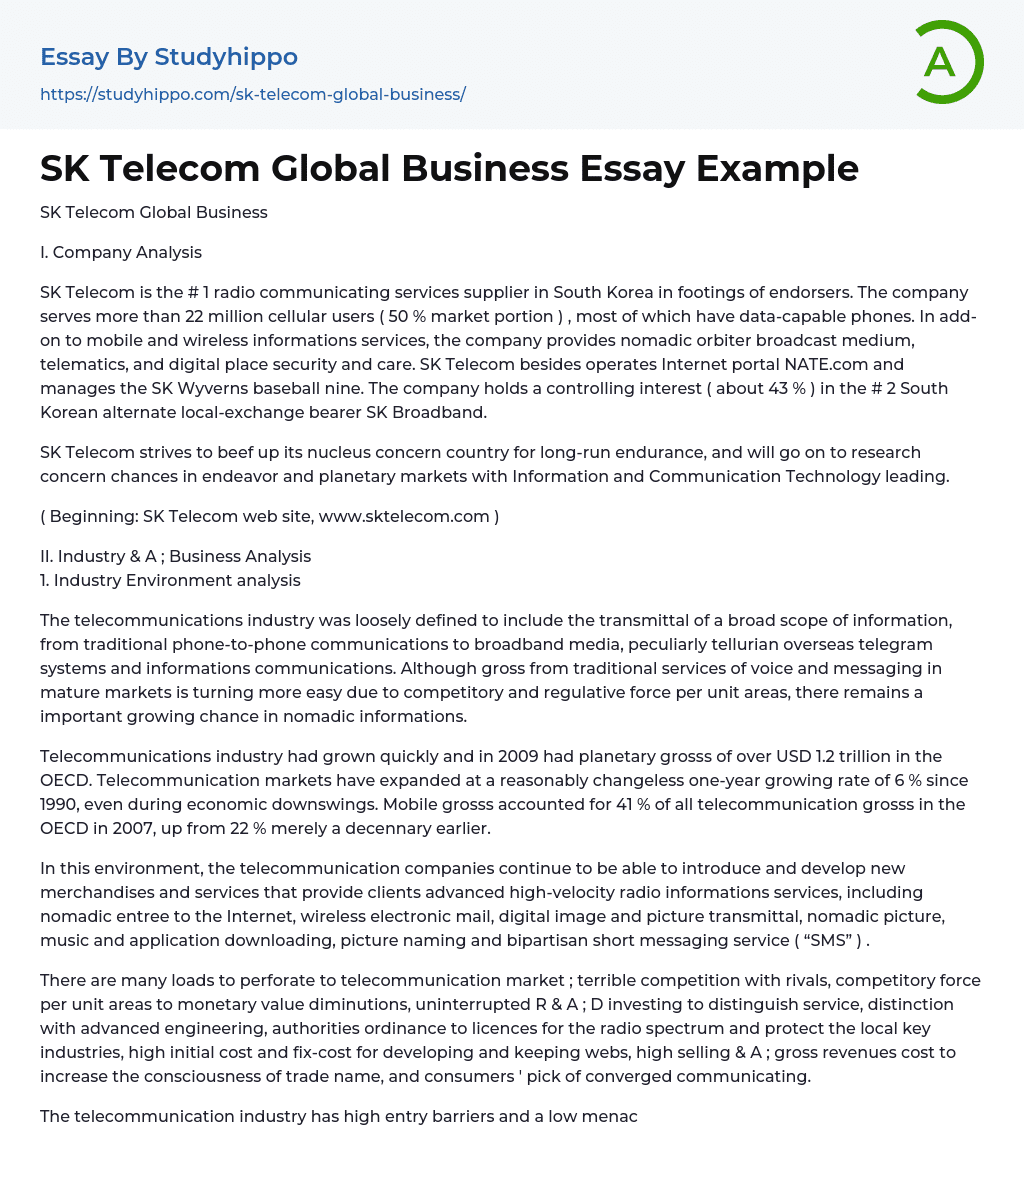 SK Telecom Global Business Essay Example